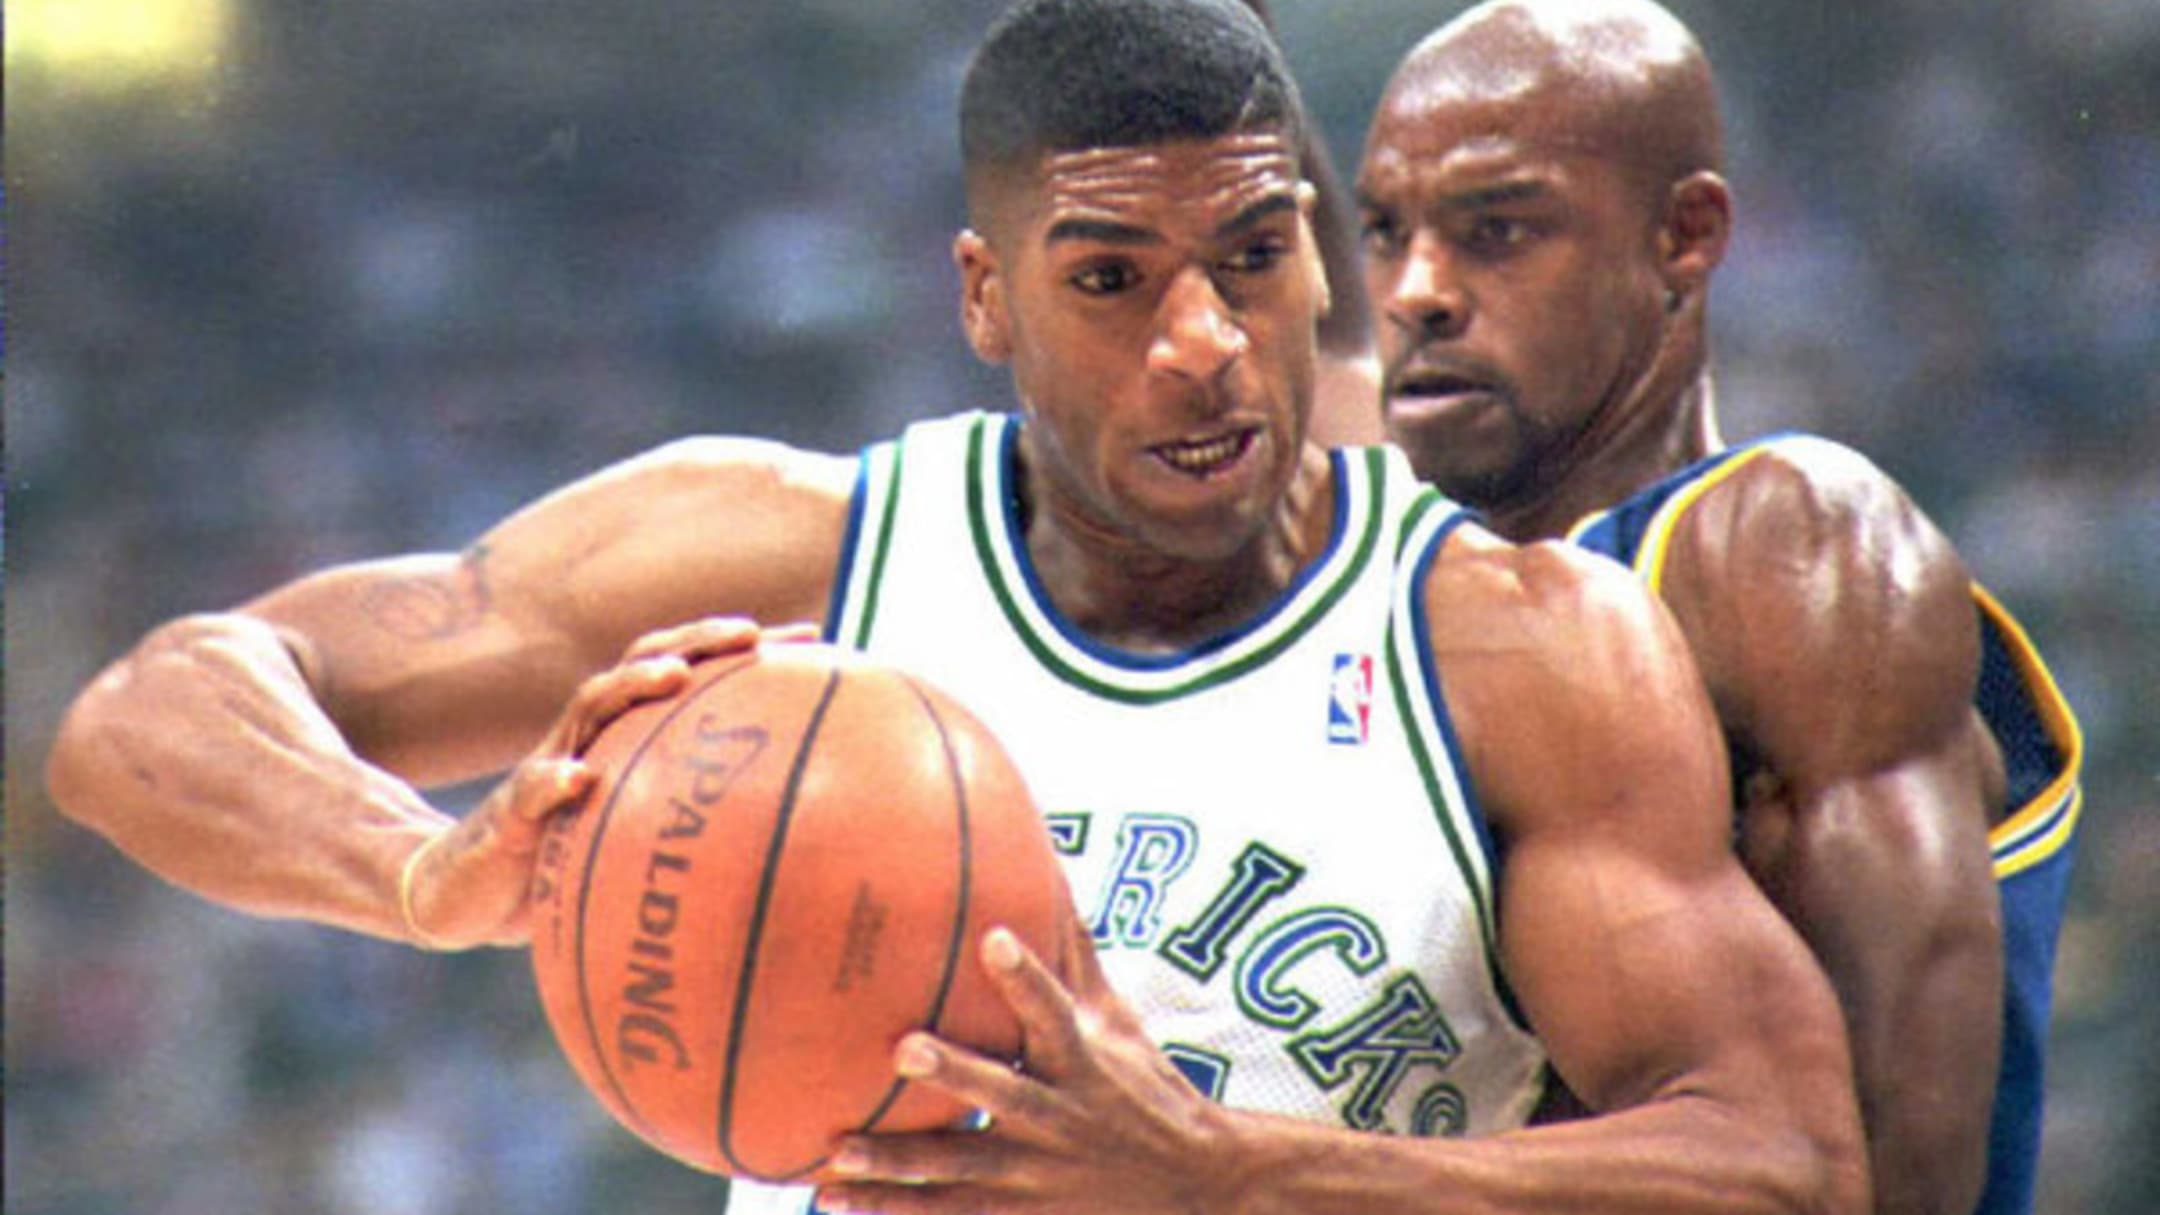 Starting Lineup - Basket Ball - 1994 Dallas Mavericks Jim Jackson